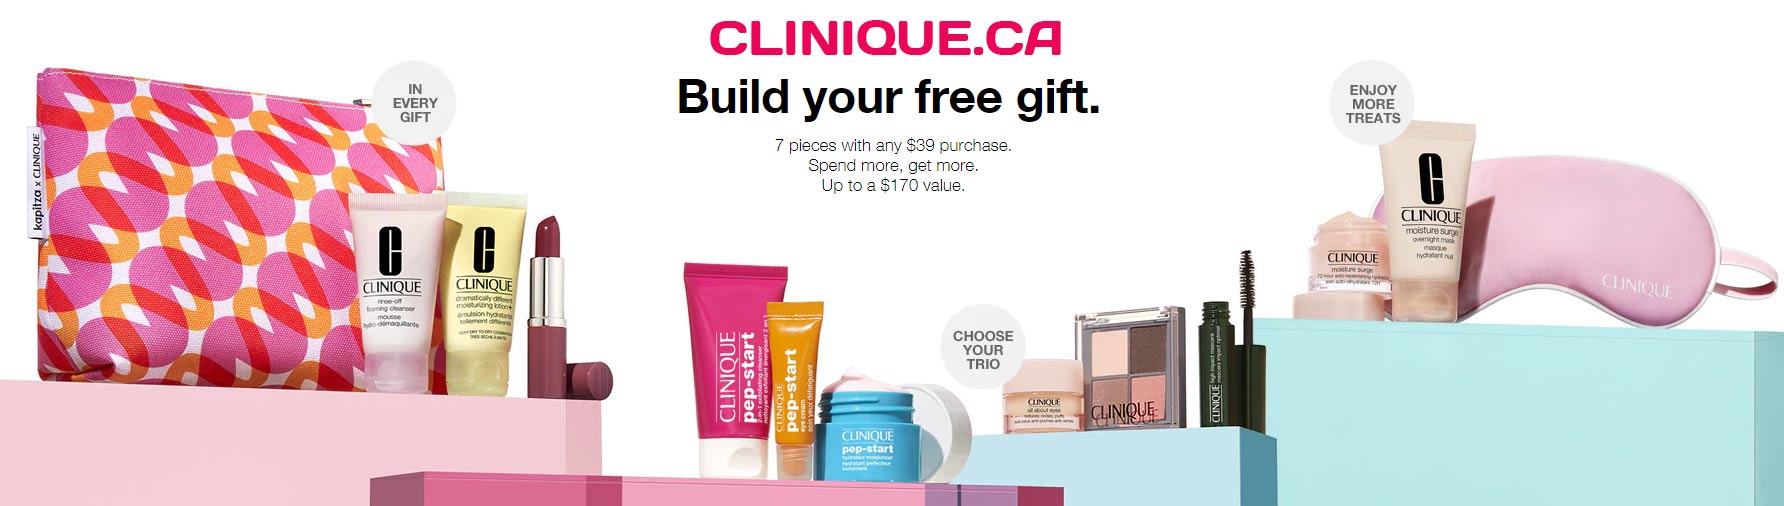 Clinique Bonus Times in Canada July 2020